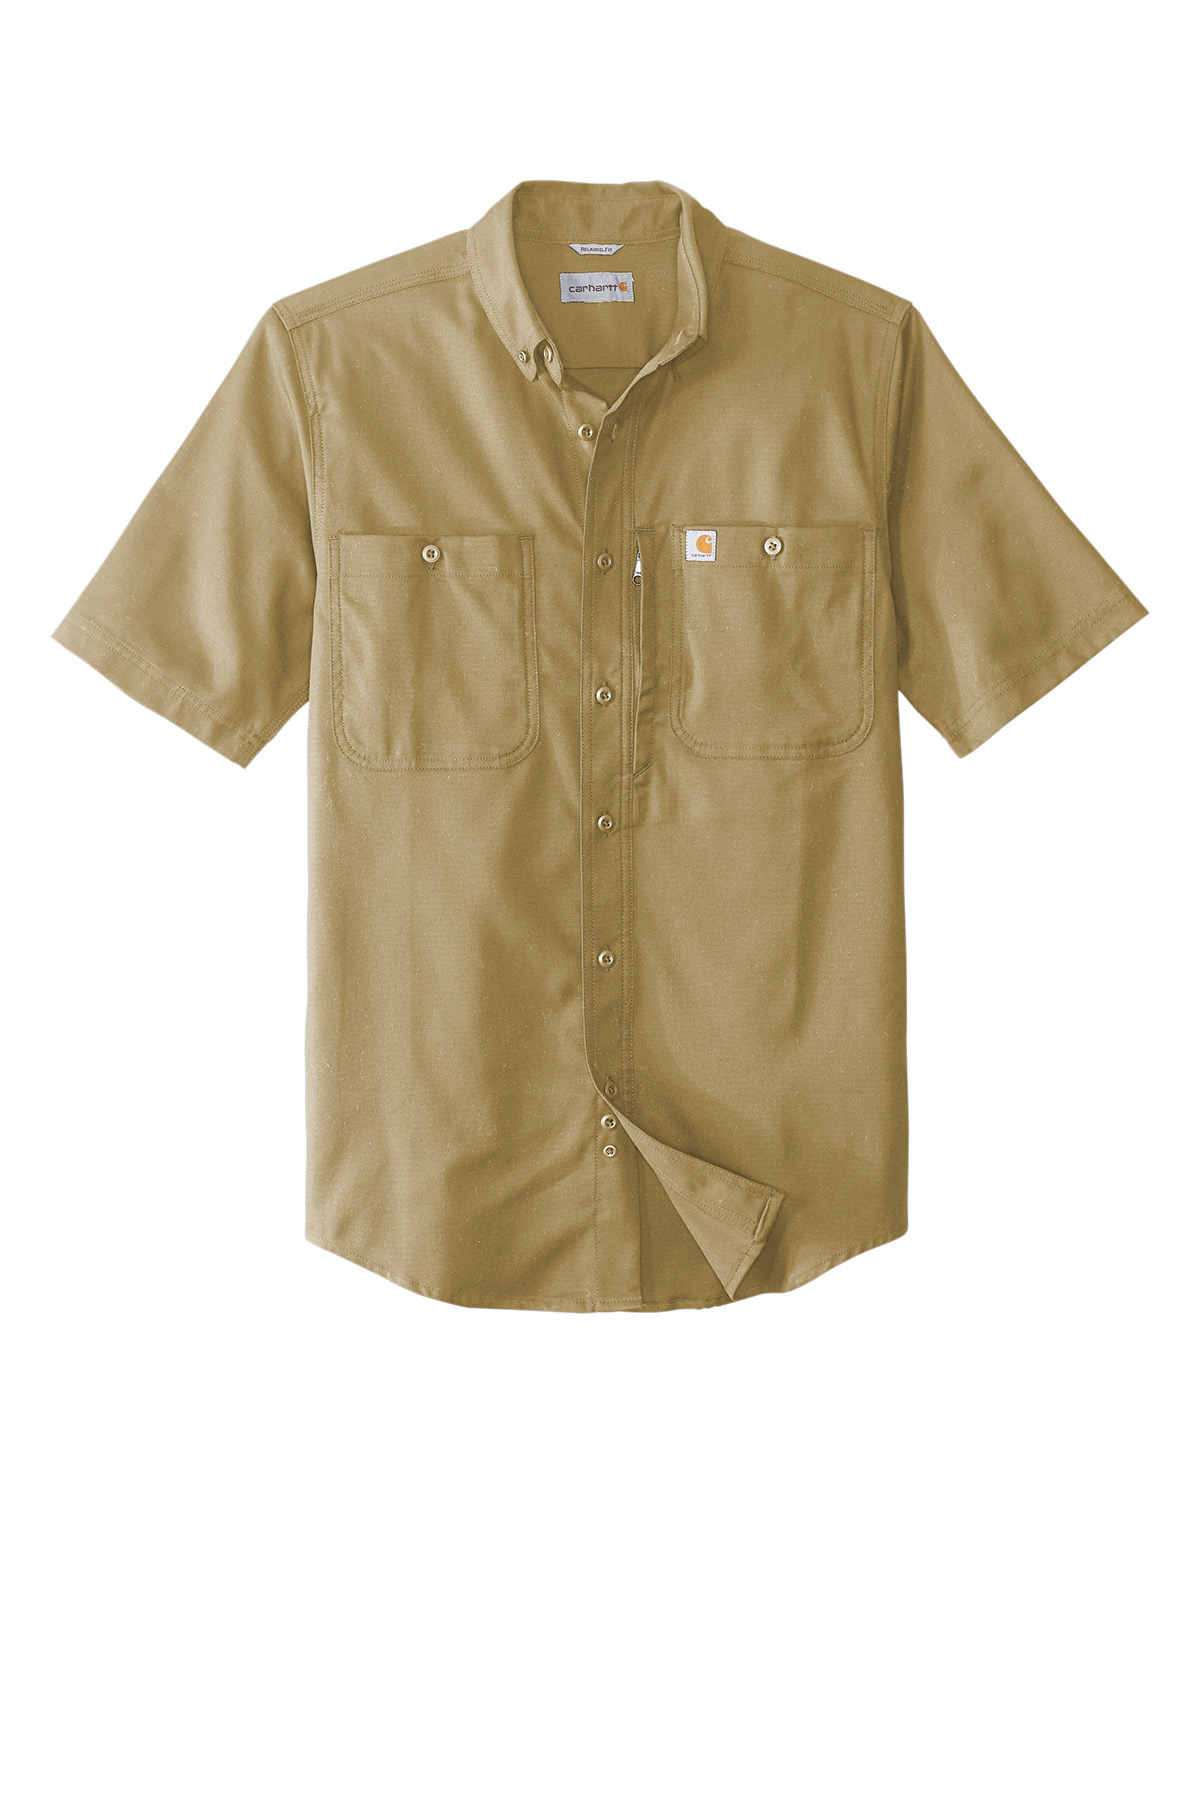 Carhartt Rugged Professional Series Short Sleeve Shirt | Product ...